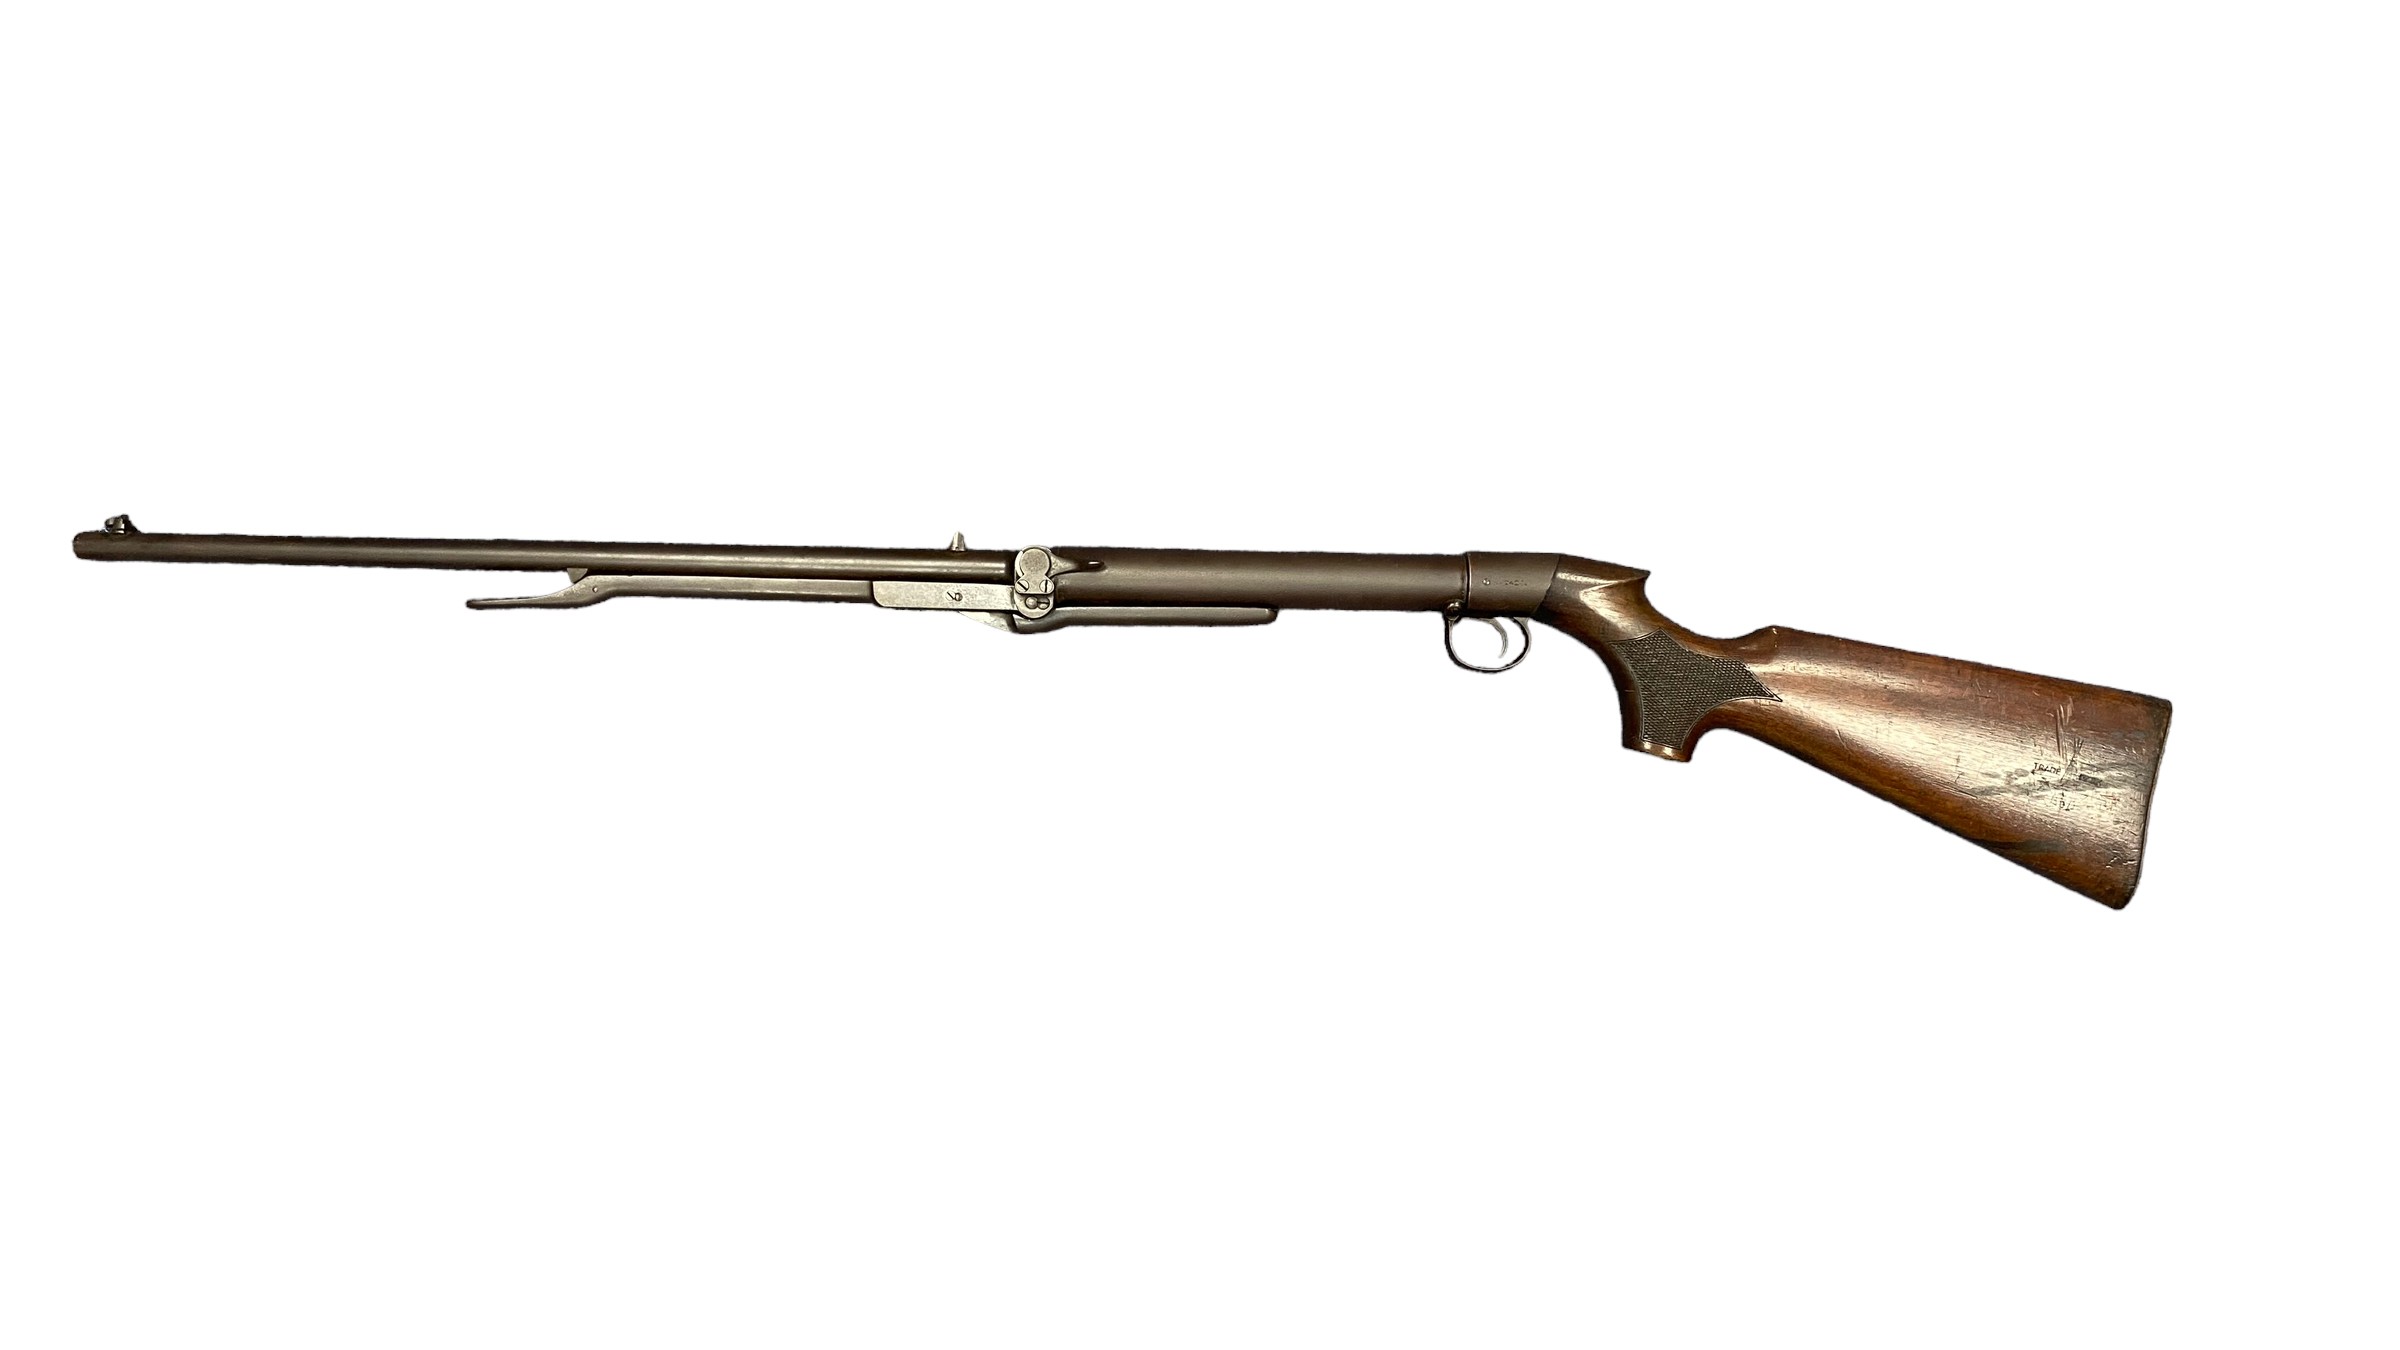 BSA Improved model D .177 under lever Air Rifle. Serial number 24269. Adjustable trigger and